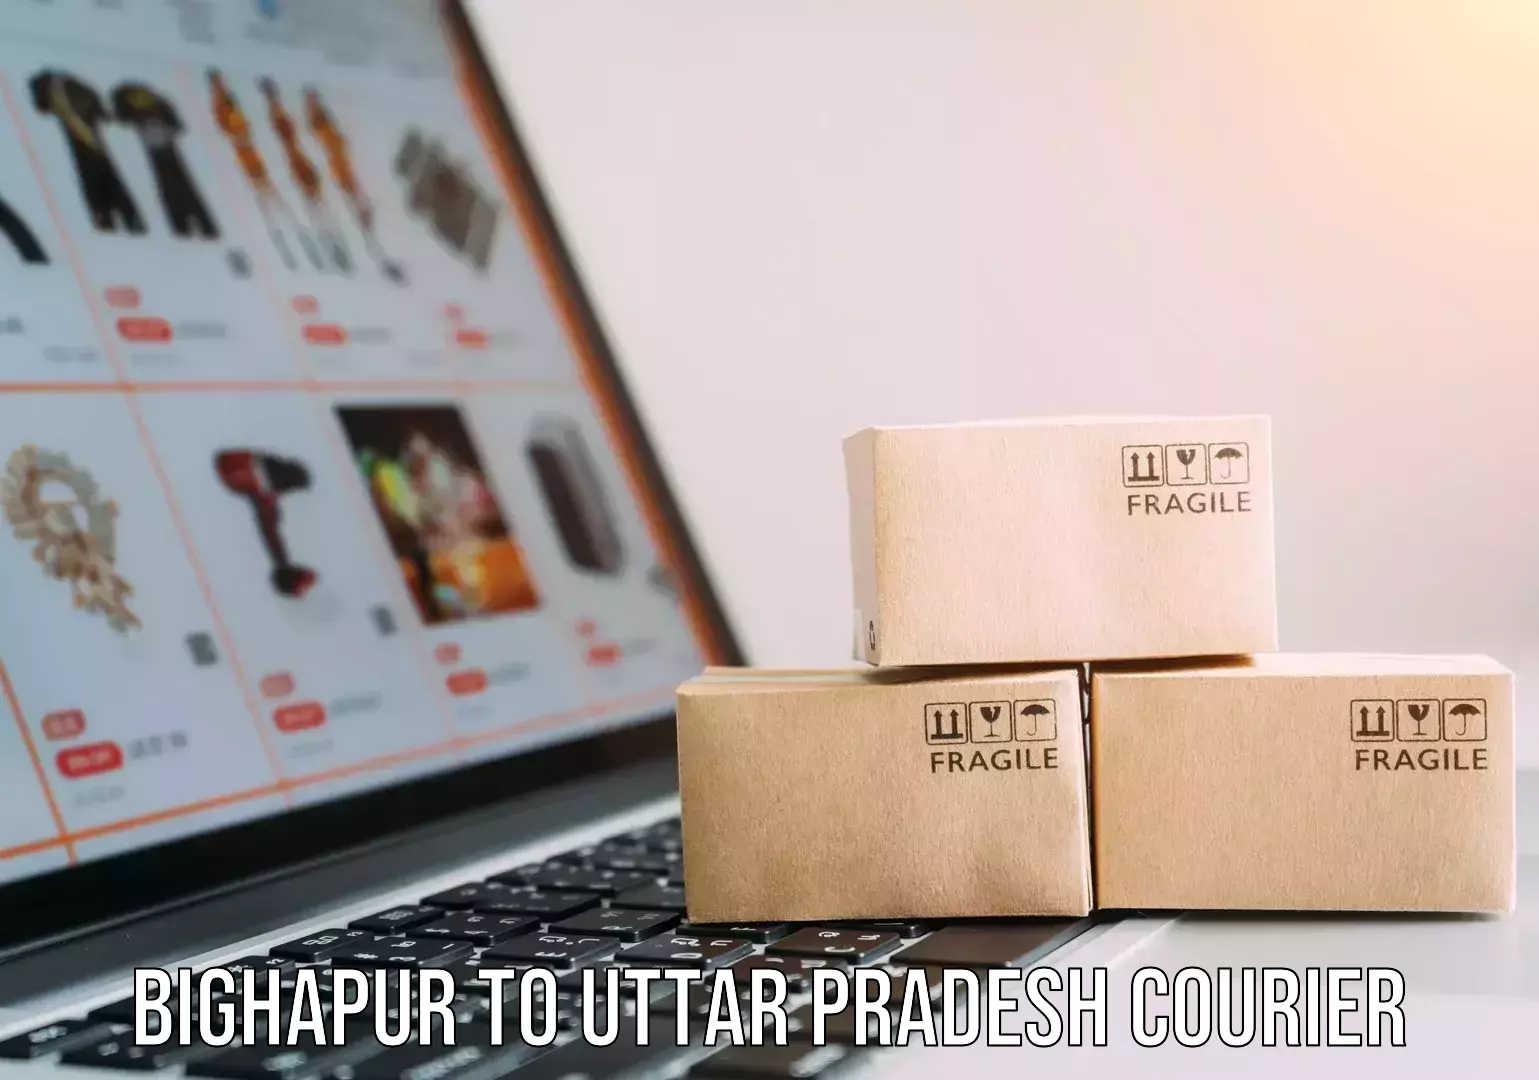 Multi-city courier Bighapur to Barhaj